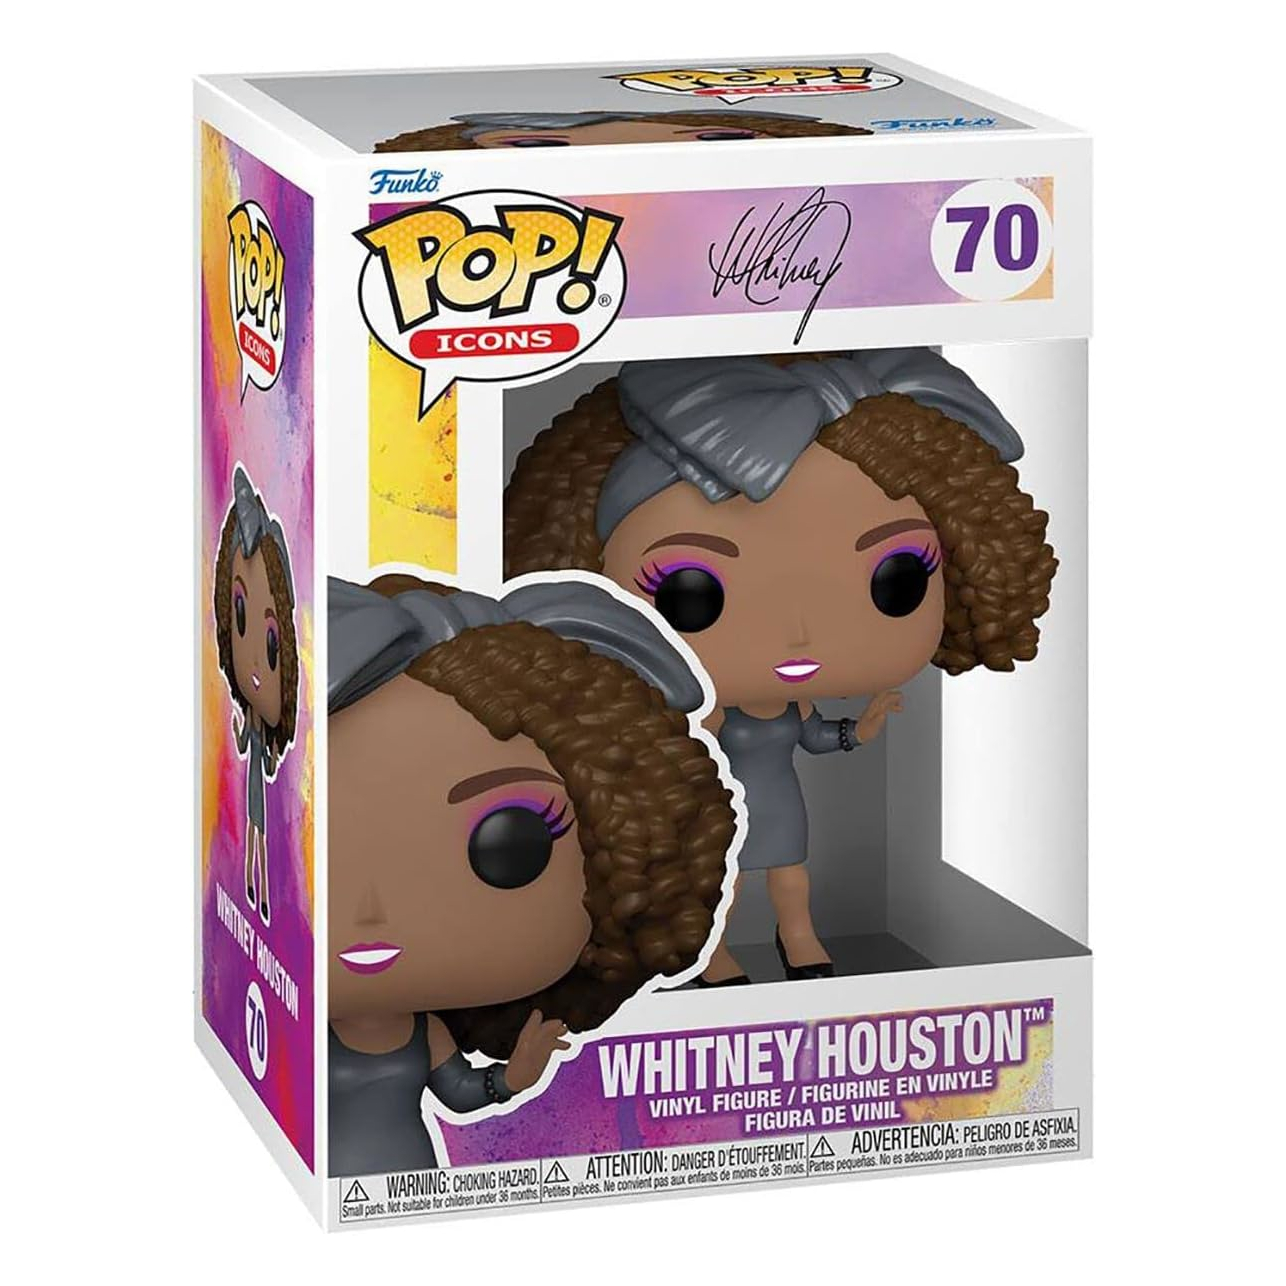 Фигурка Funko Pop! Icons Whitney Houston How Will I Know фигурка funko pop icons whitney houston hwik